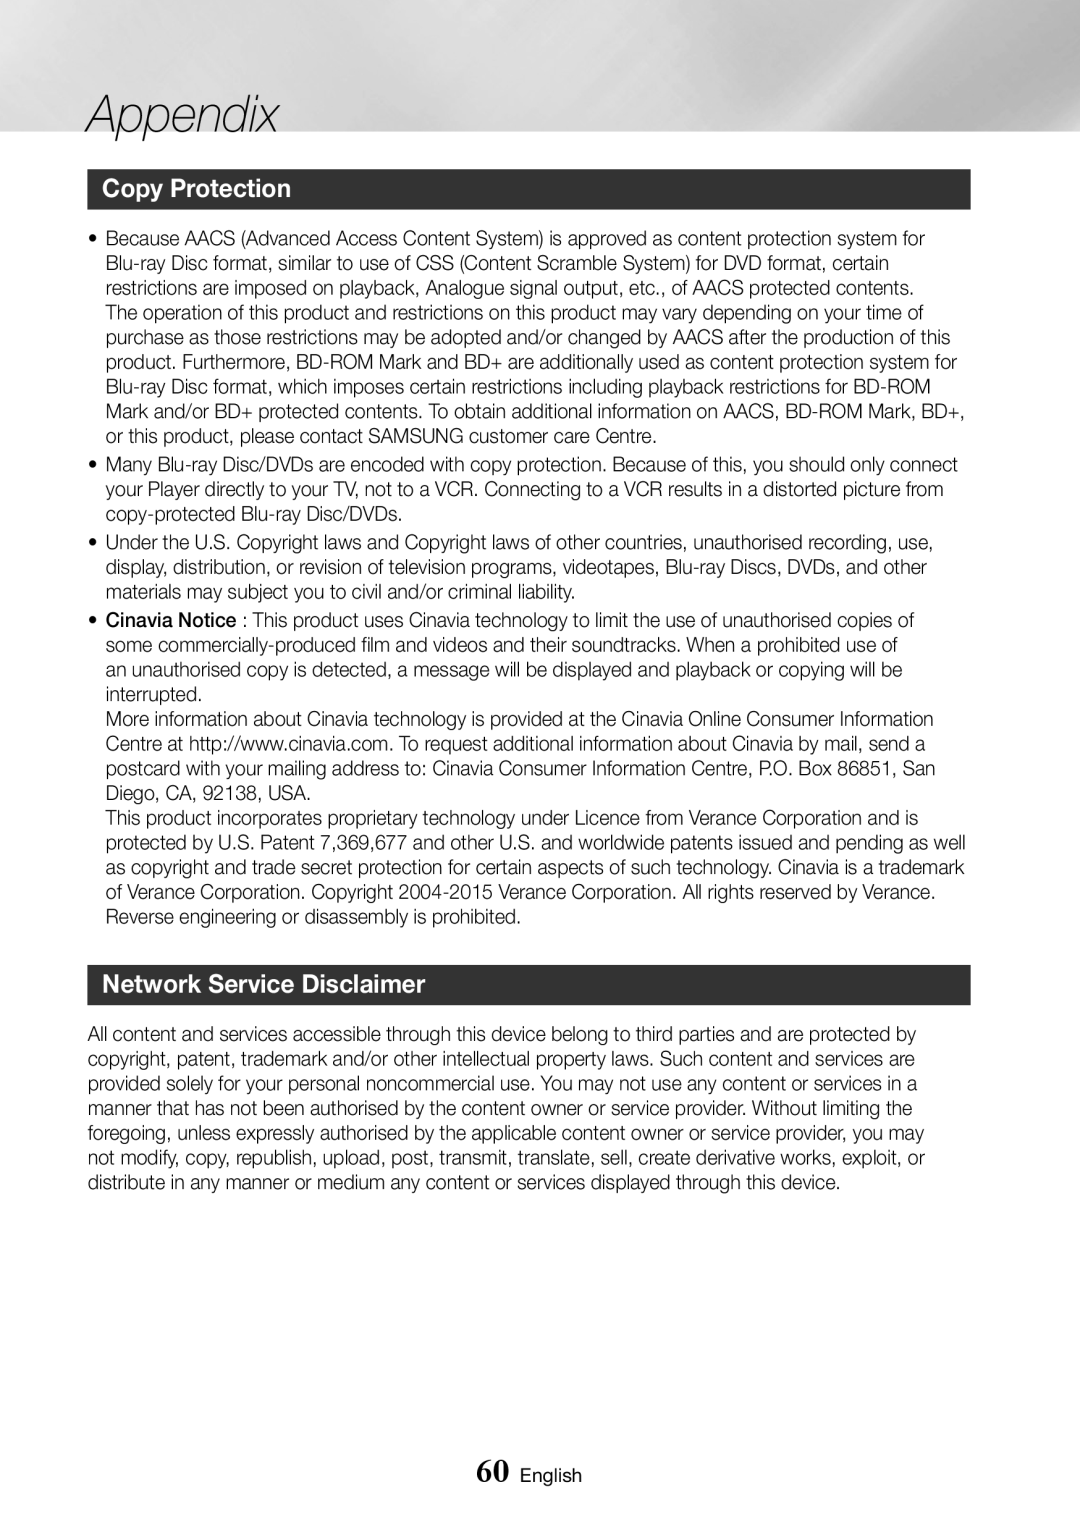 Samsung BD-J7500/EN manual Copy Protection, Network Service Disclaimer, Appendix 